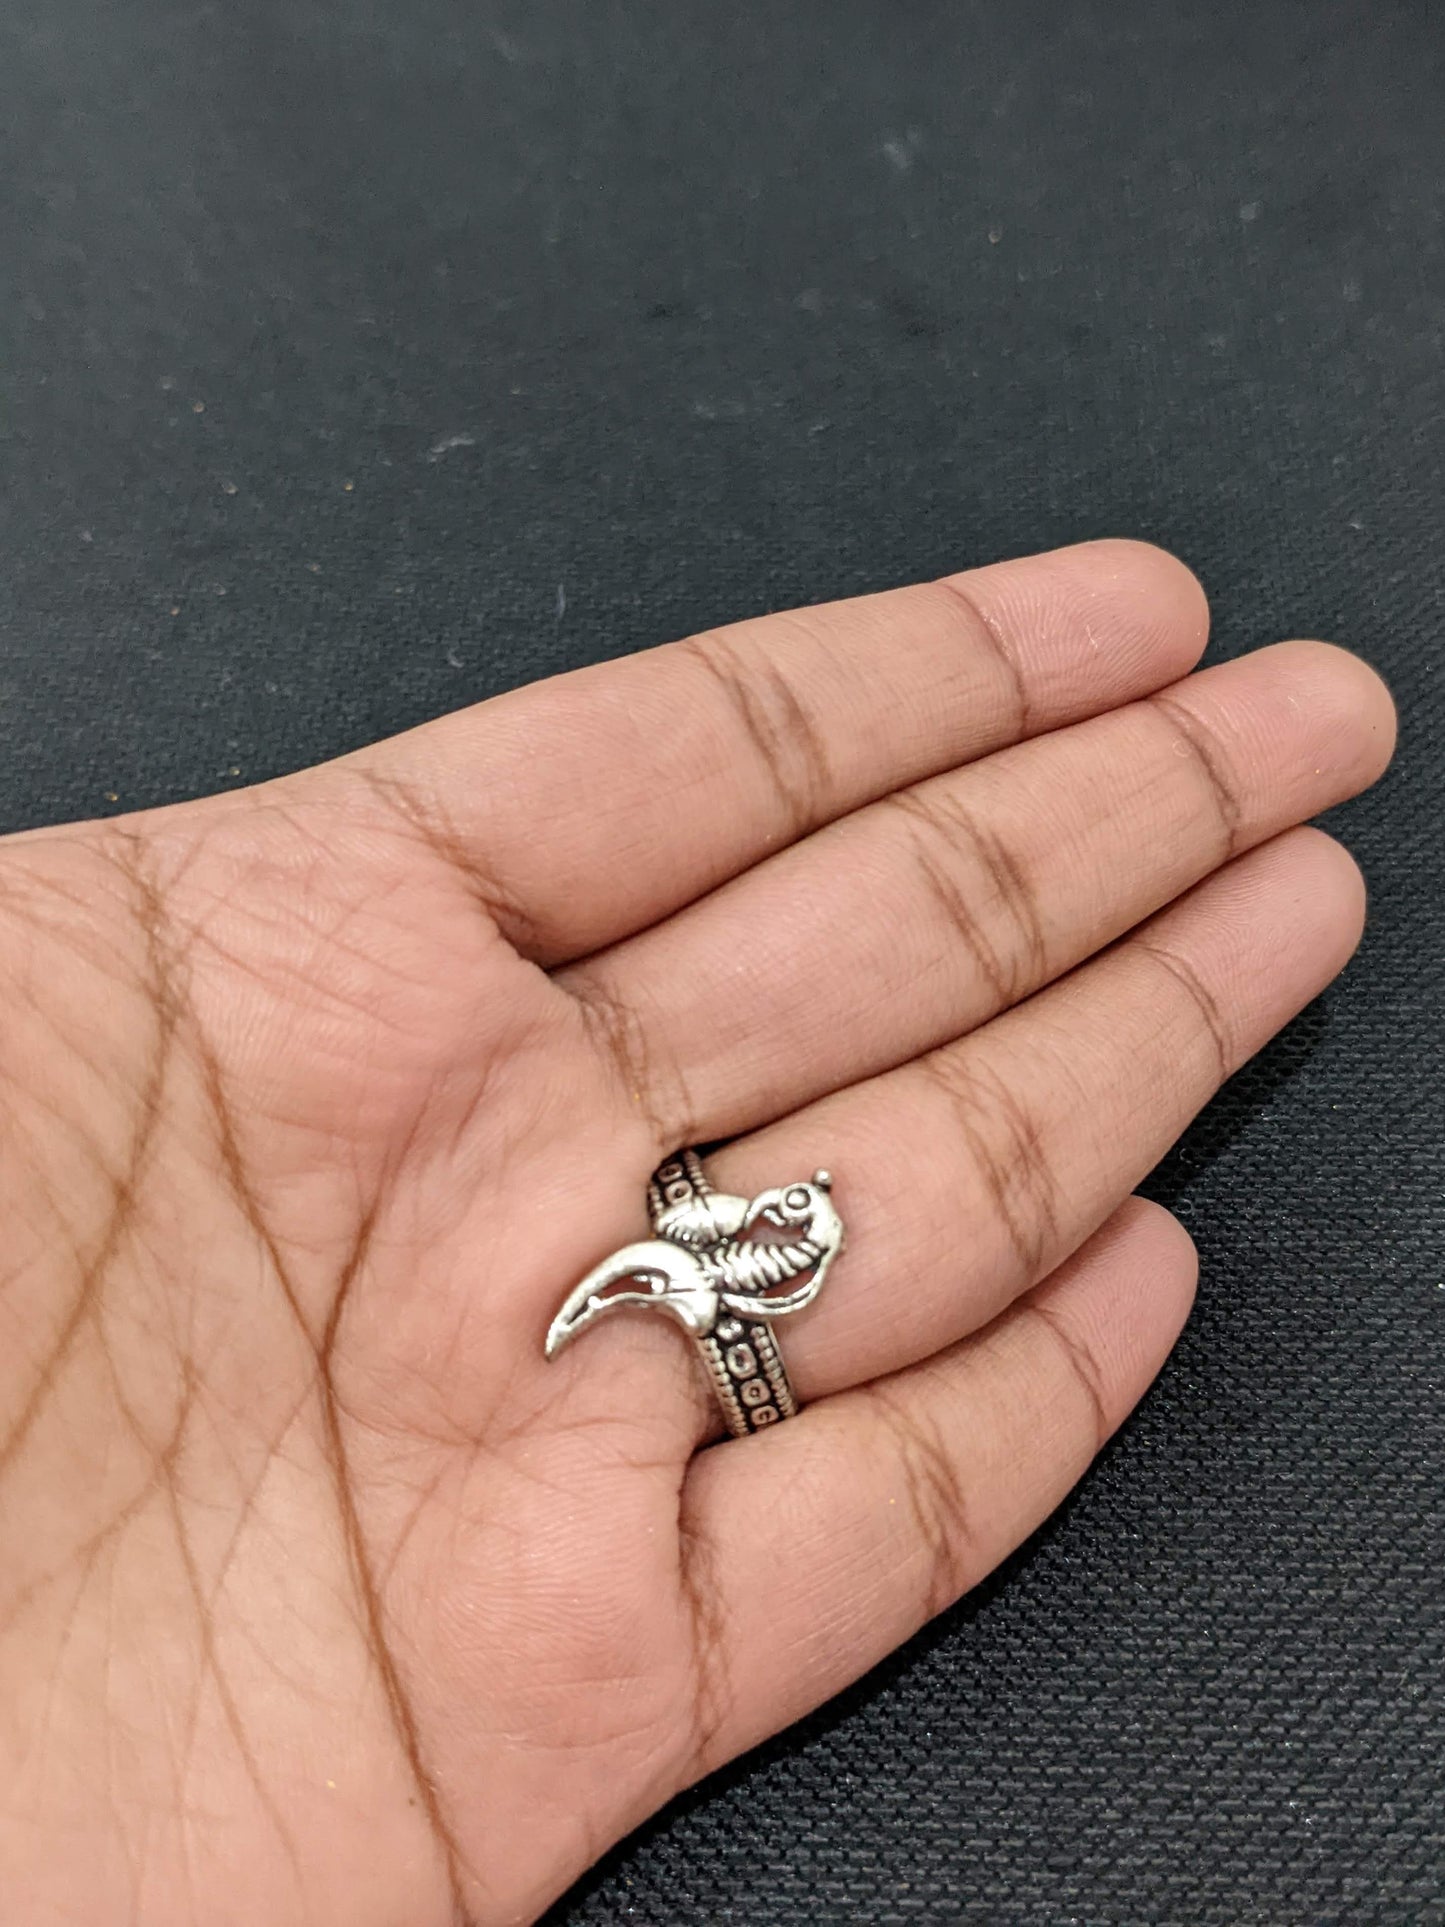 Oxidized Silver Peacock design Adjustable Finger ring - 3 designs